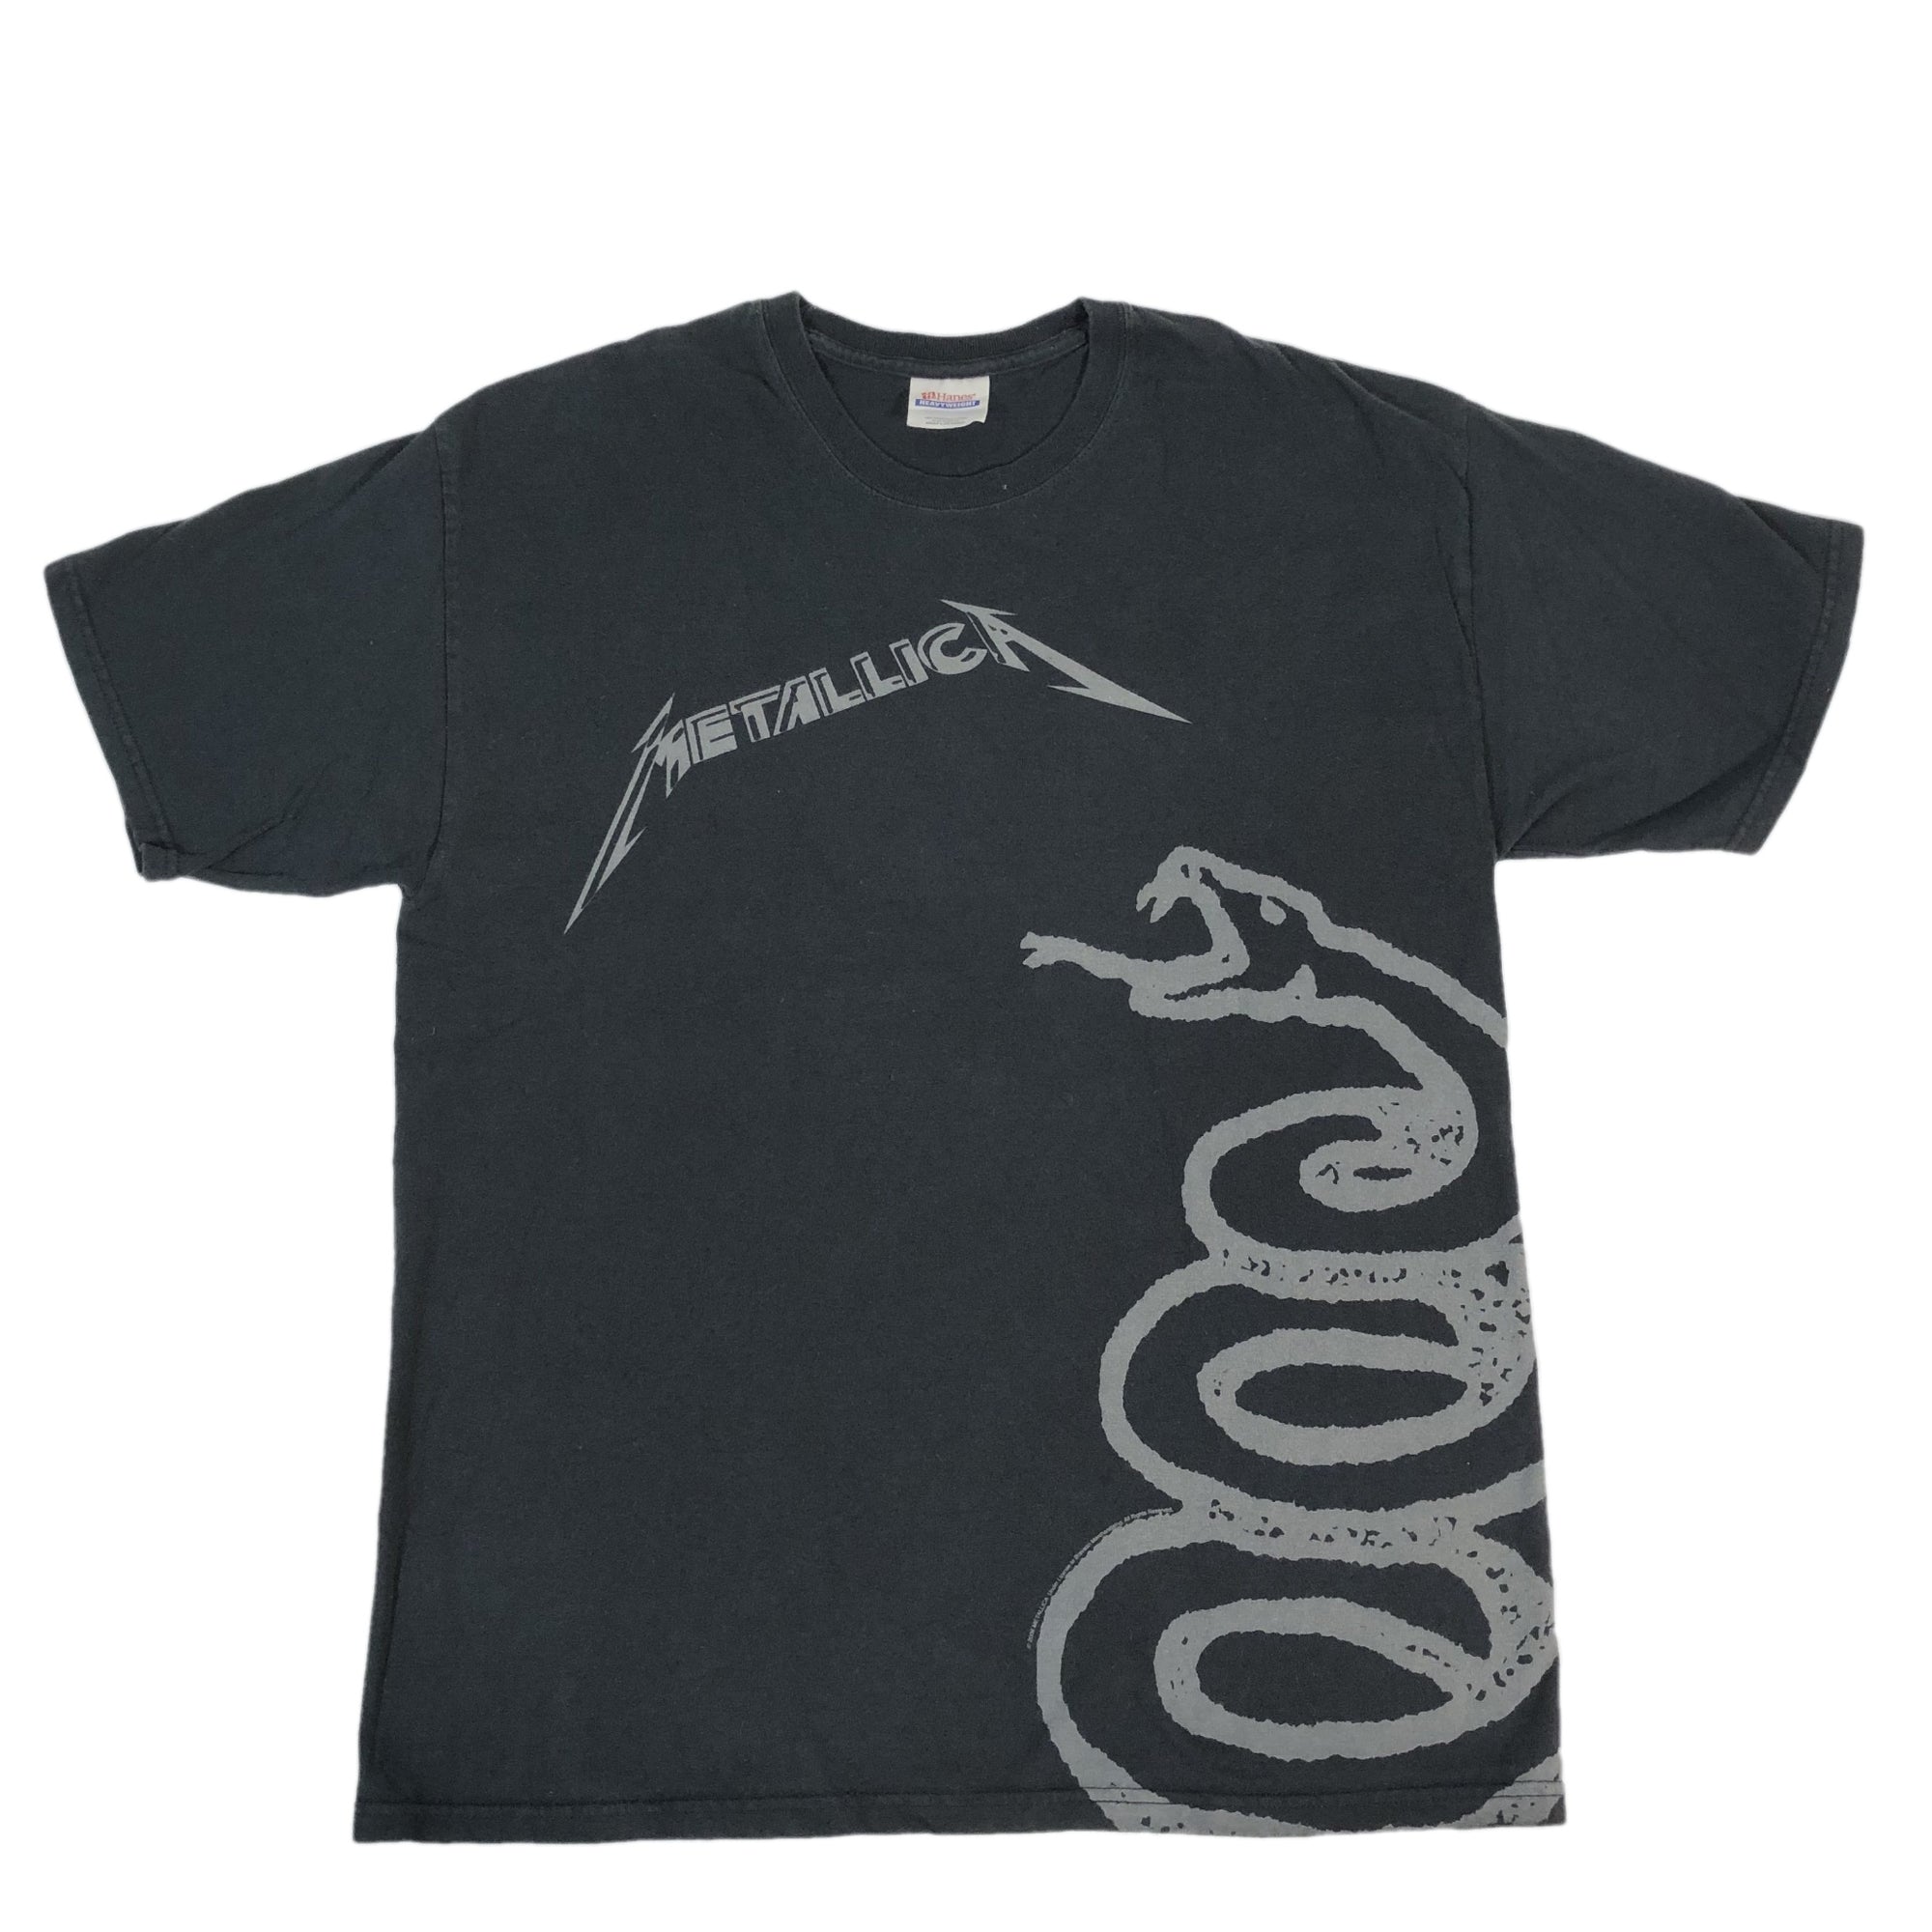 Vintage Metallica "Black Album" T-Shirt - jointcustodydc